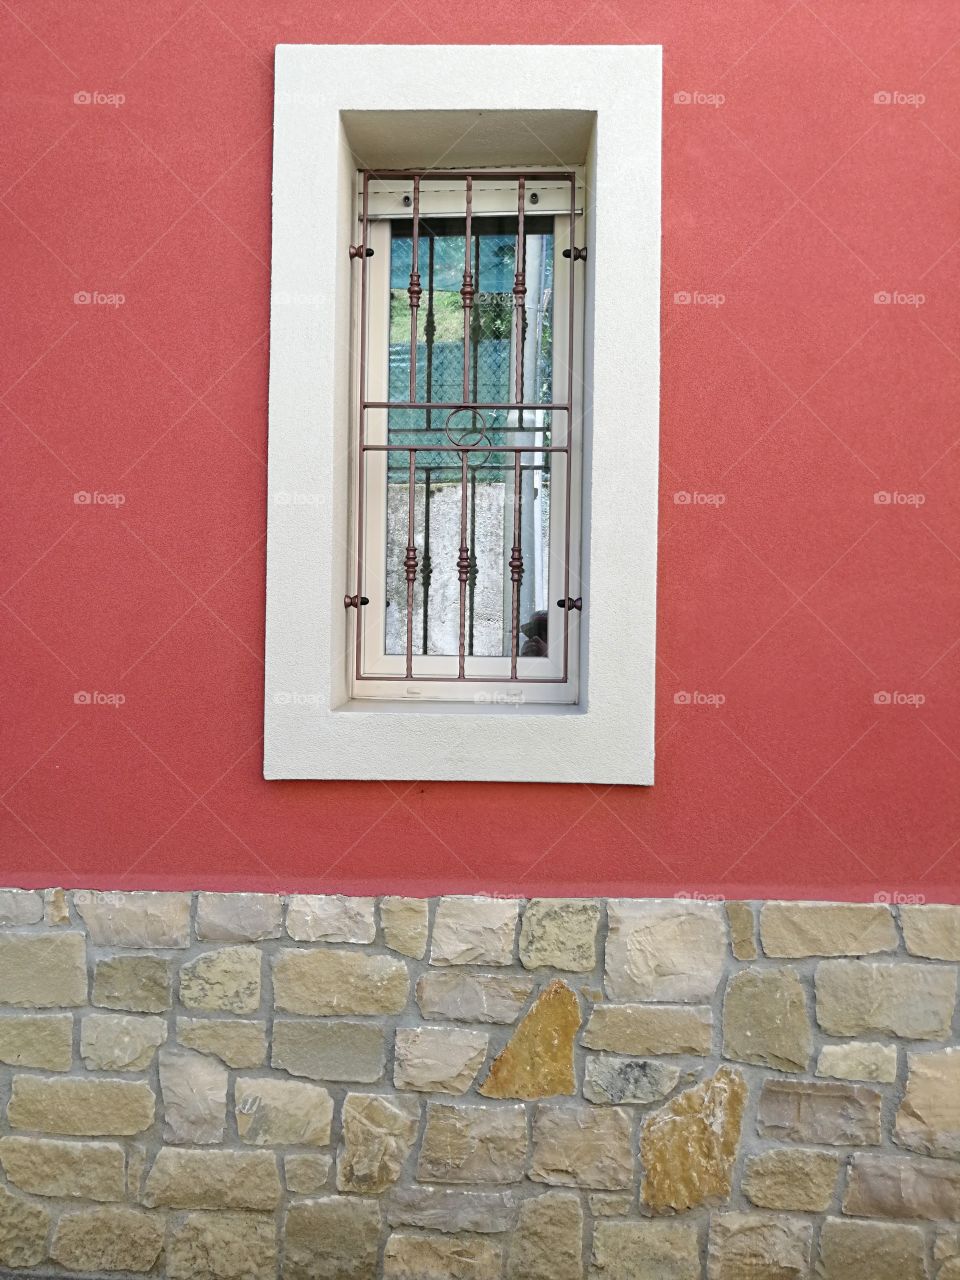 Rectangular window